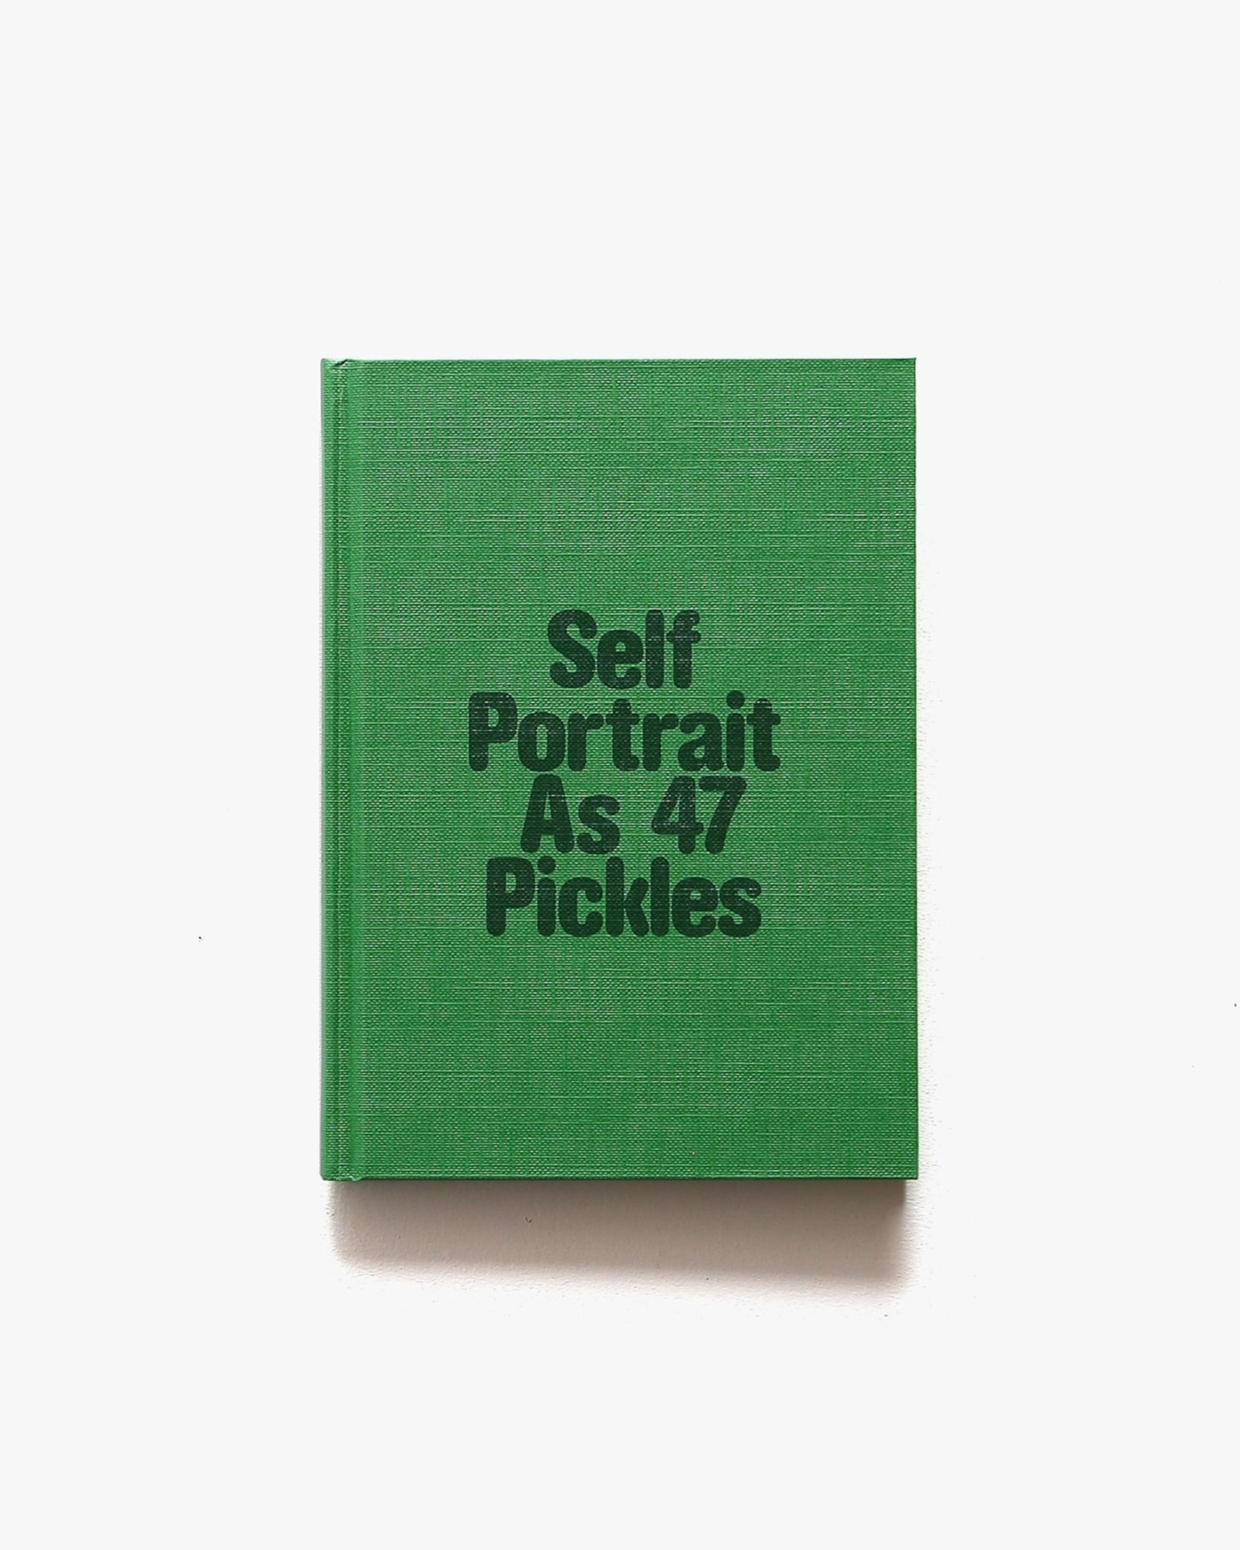 Self Portrait as 47 Pickles  | Erwin Wurm アーウィン・ワーム